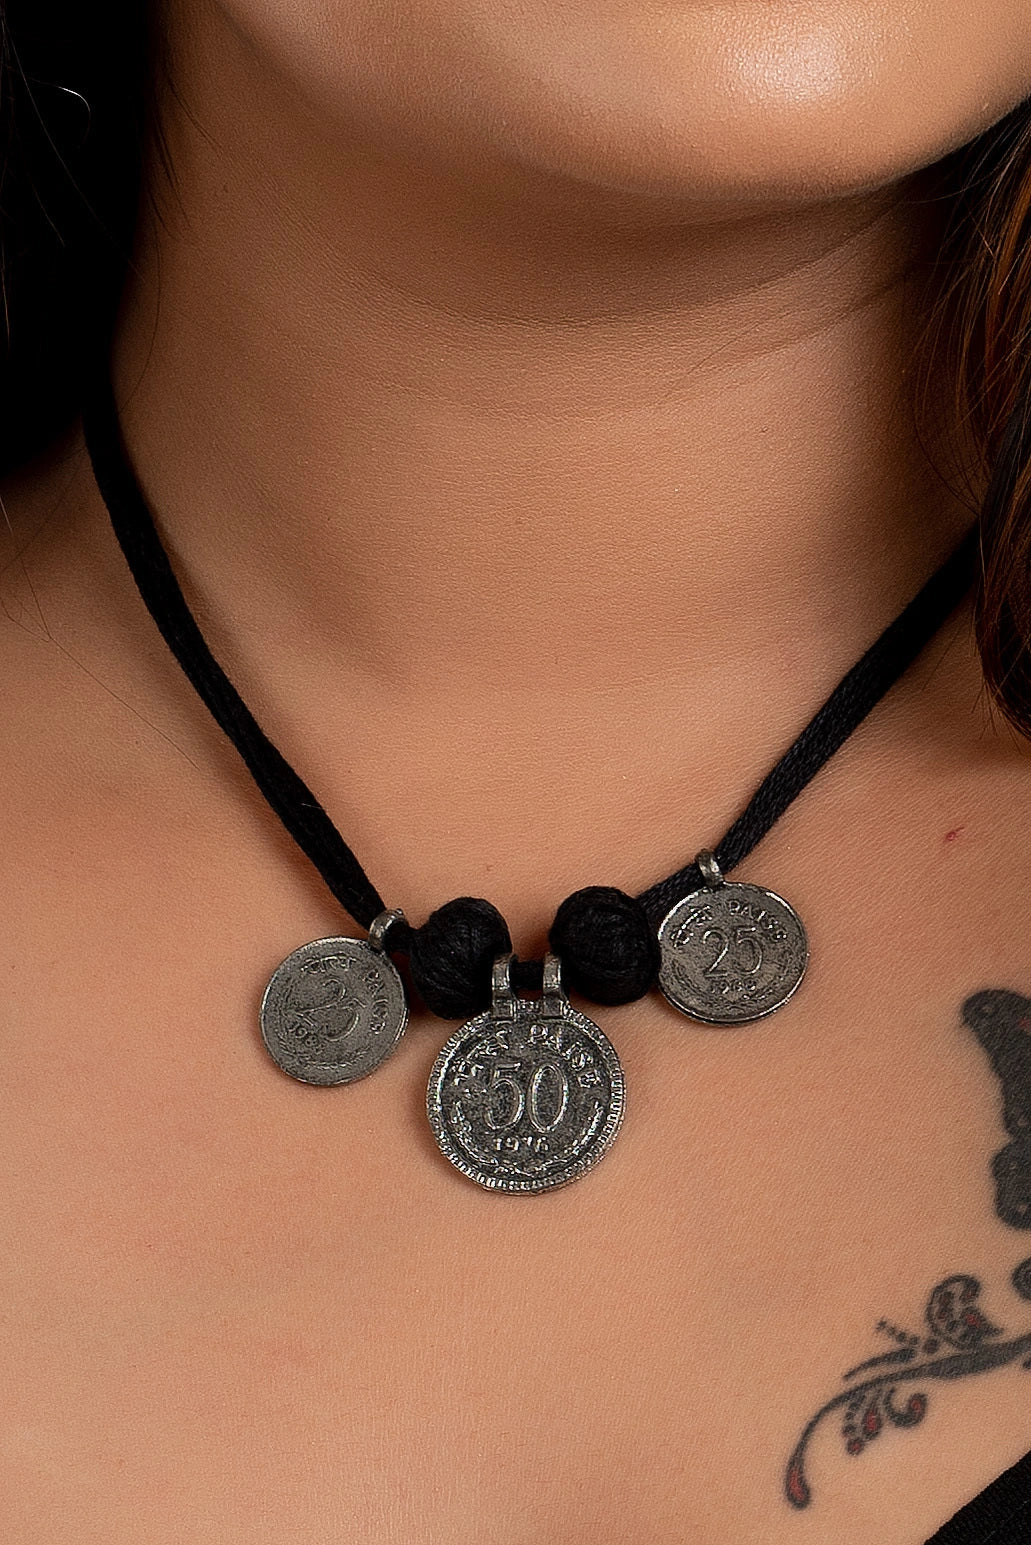 German Silver coin neckpiece with thread bead and Adjustable black cotton dori